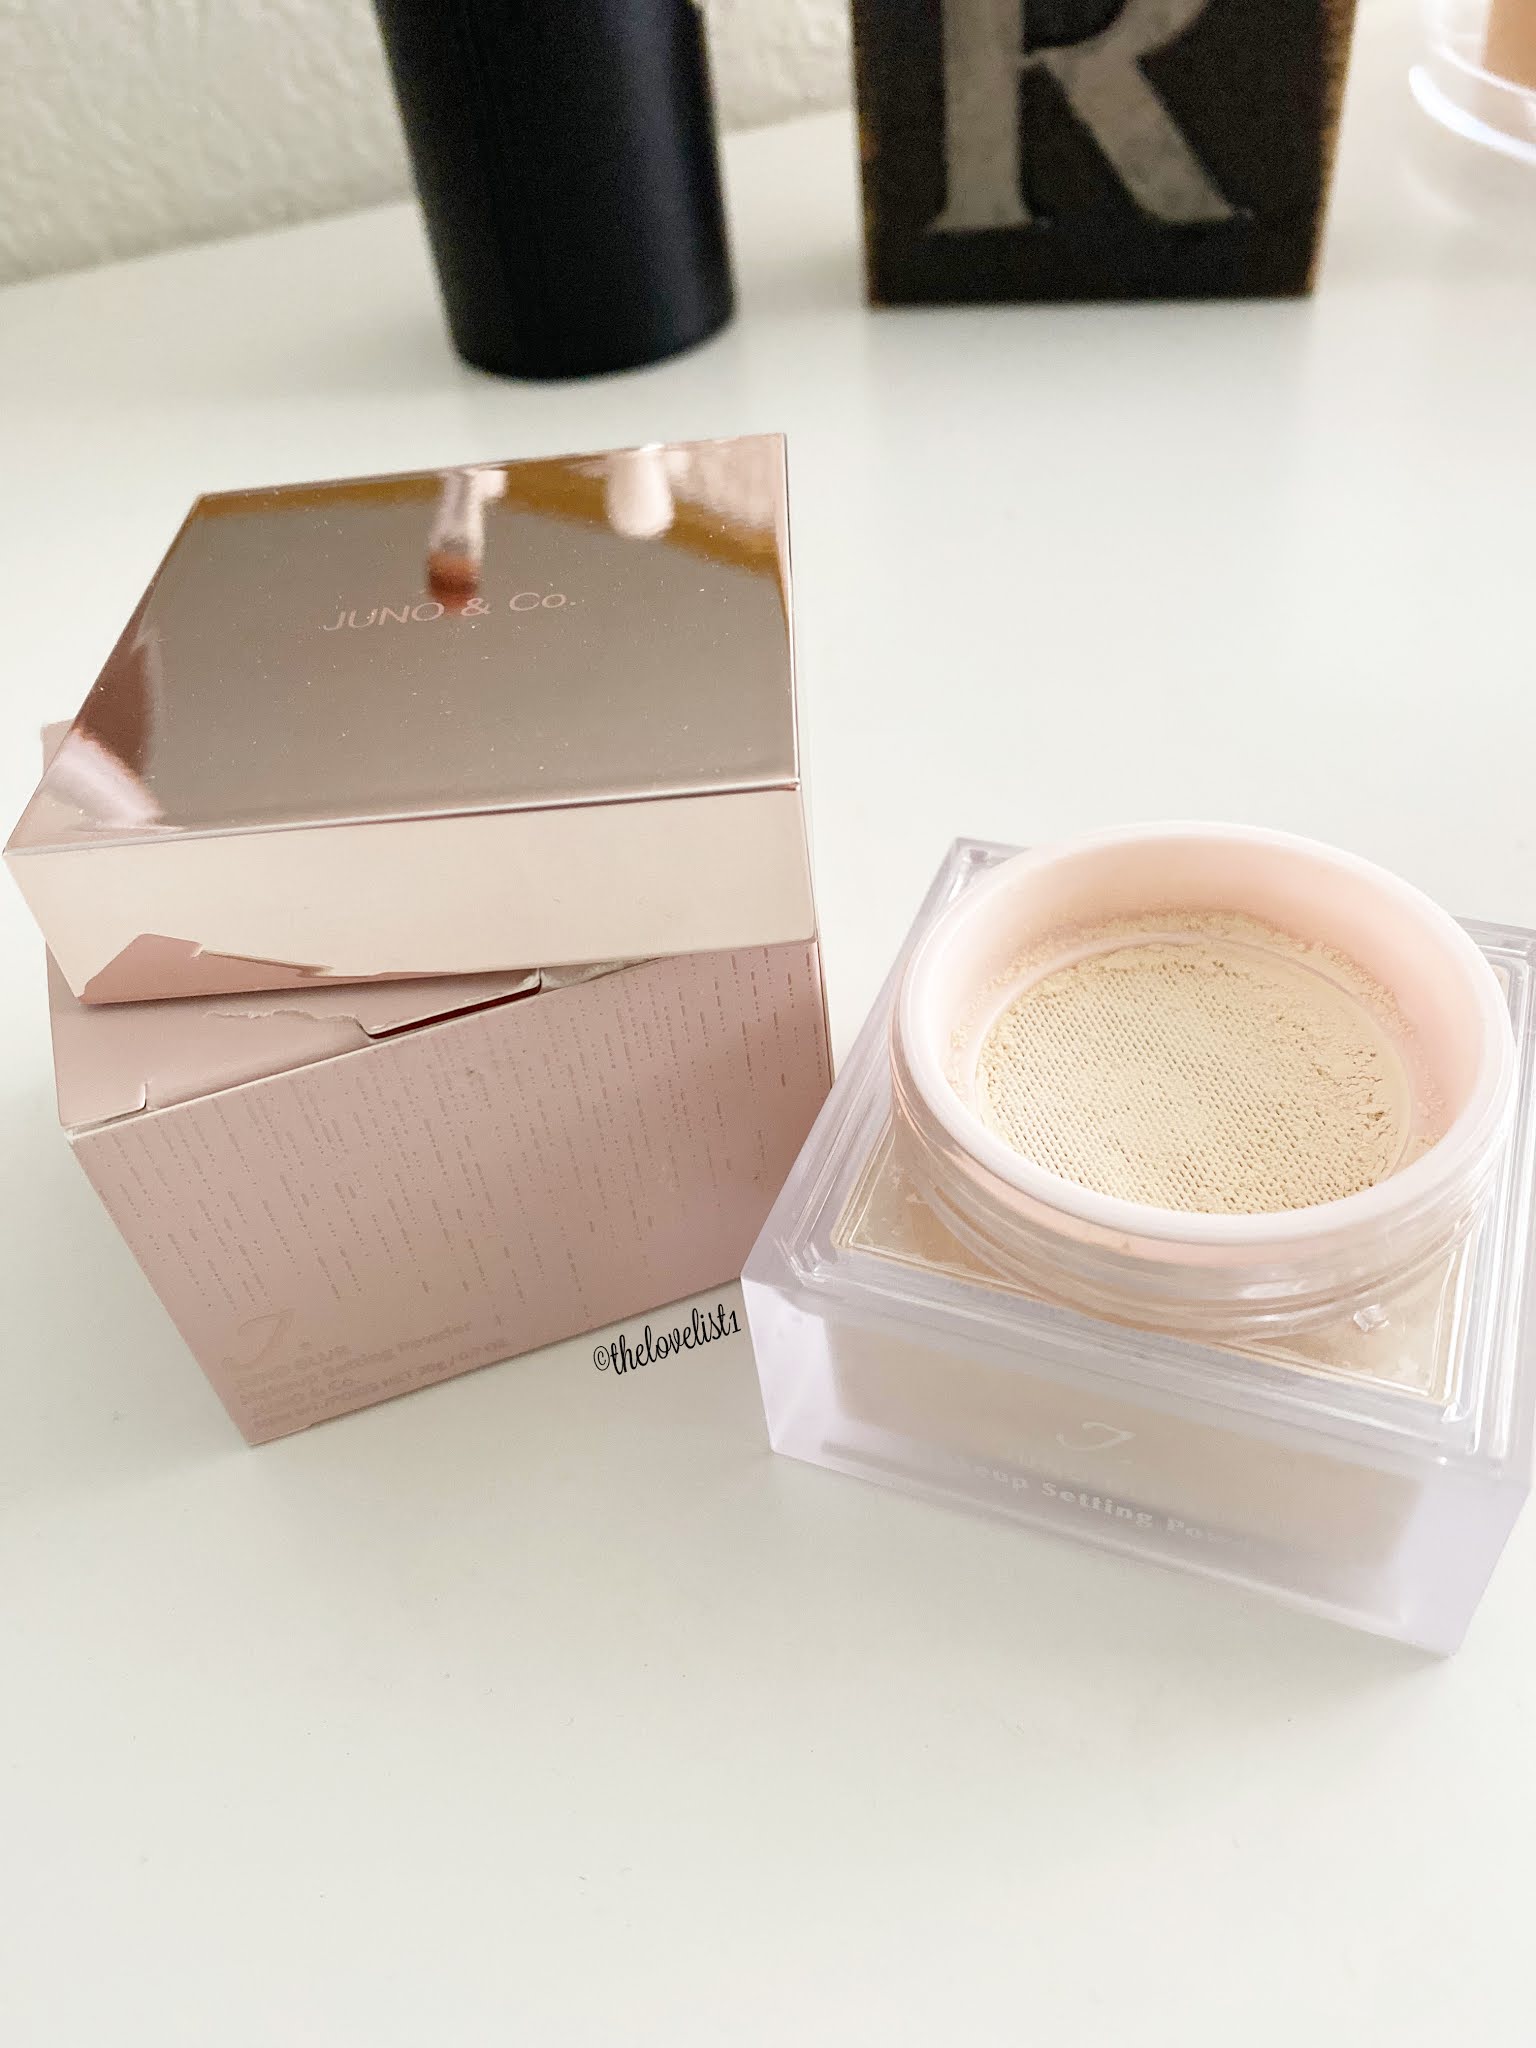 tack Korrupt Fæstning Product Review | The Juno & Co Blur Makeup Setting Powder